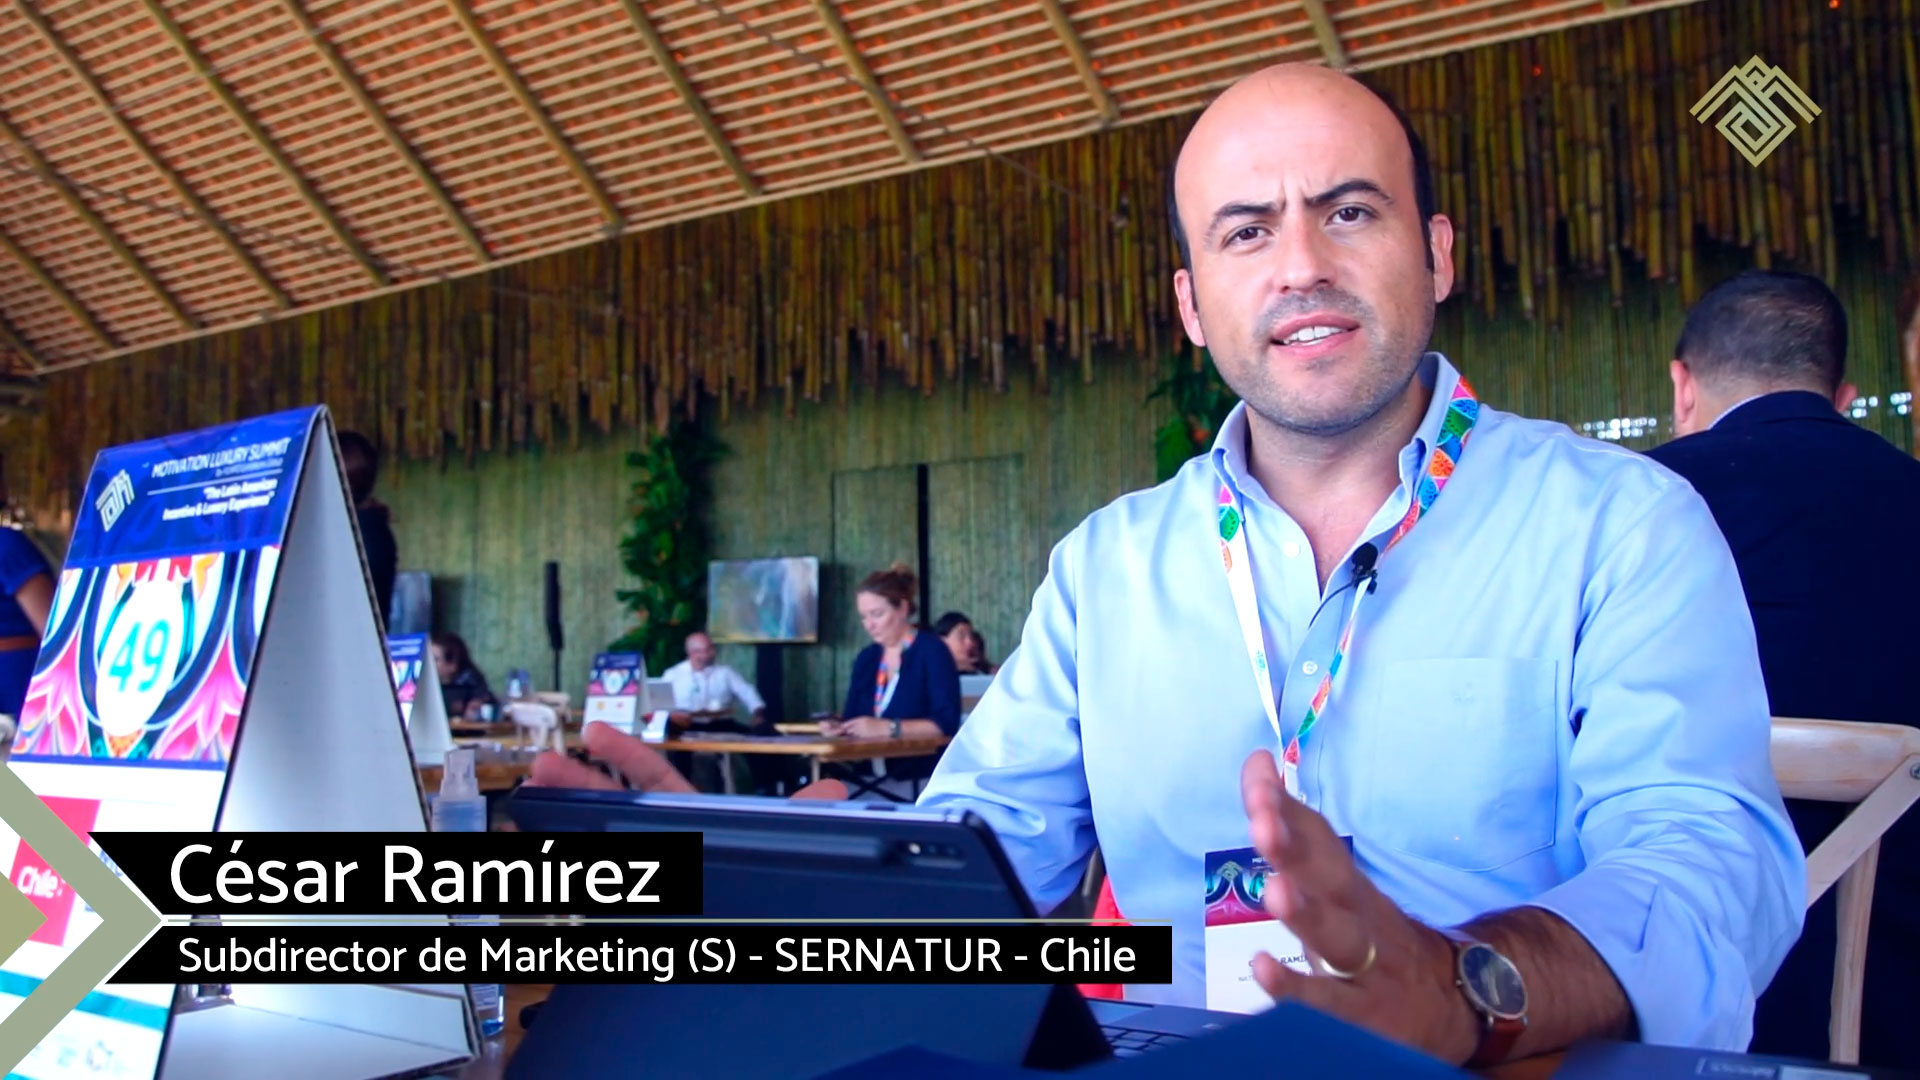 César Ramírez -Subdirector de Marketing (S) - SERNATUR - Chile